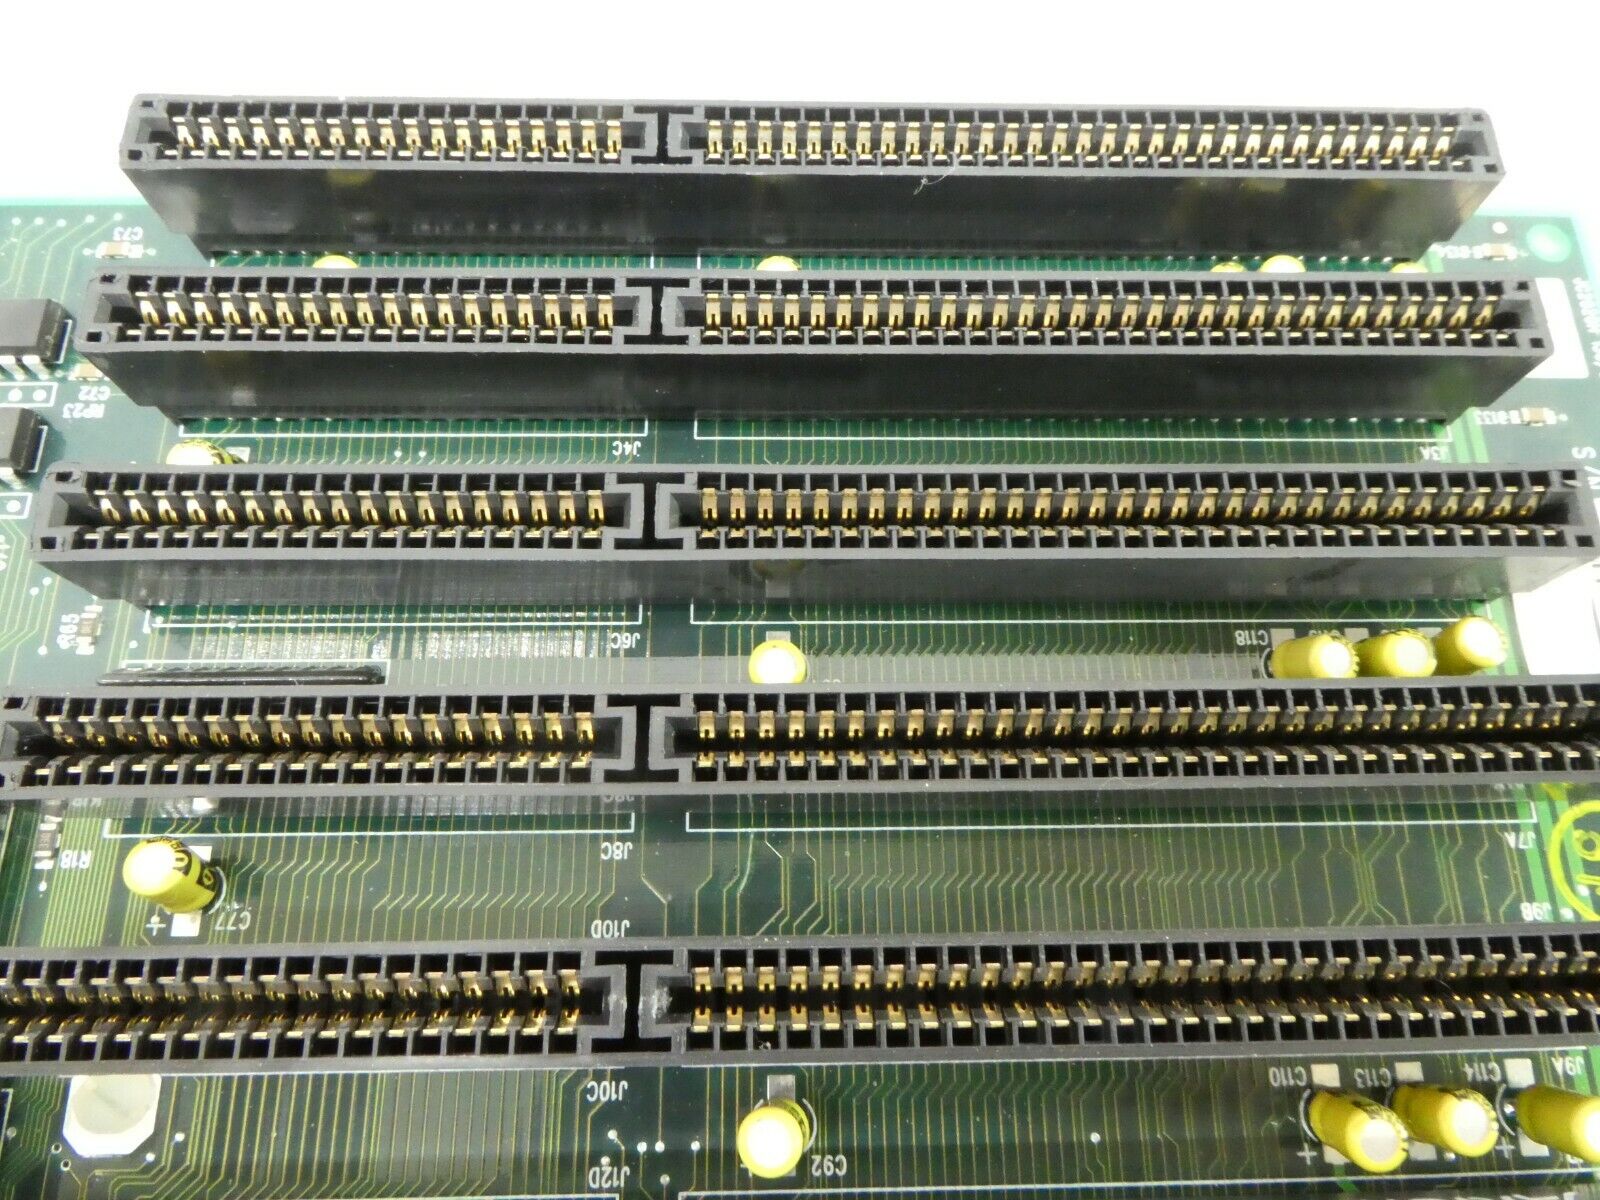 Electroglas Peak/DM - 386DX Motherboard PCB 4085x Horizon PSM Spare